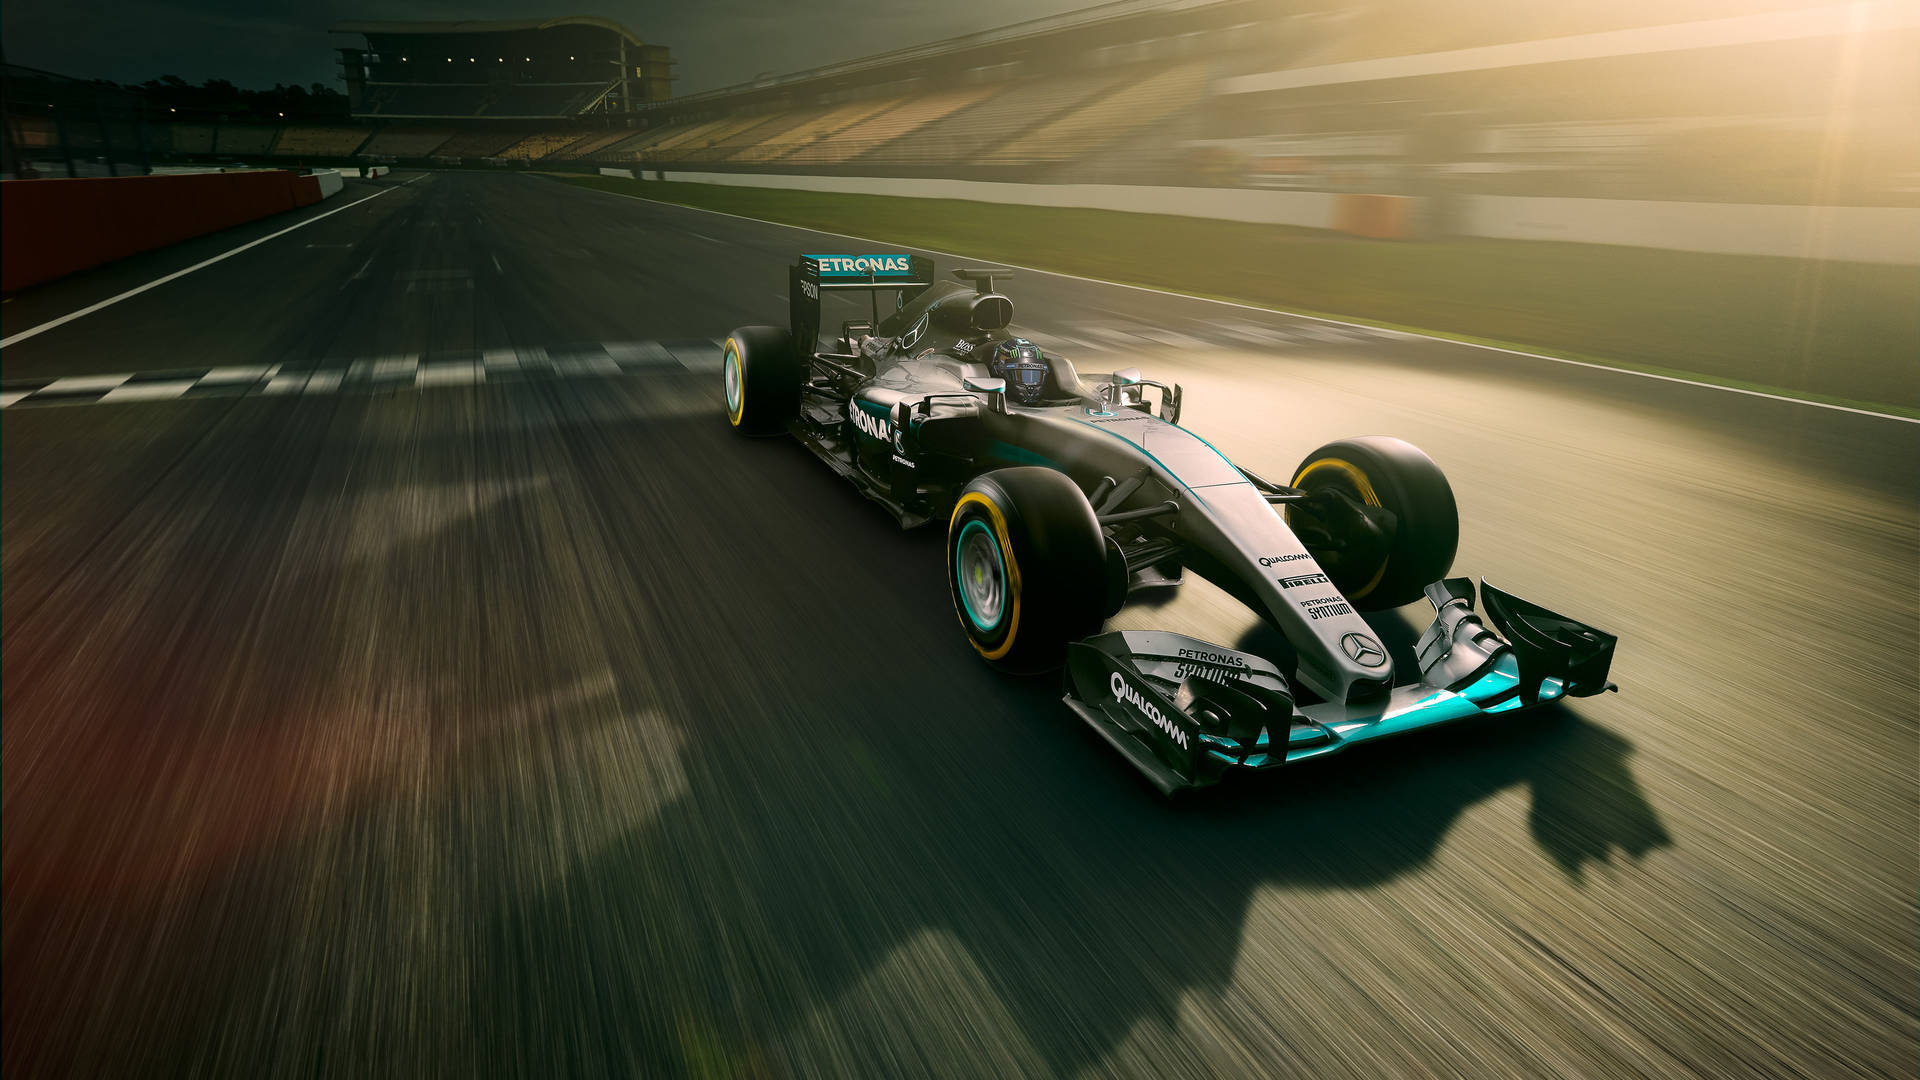 Petronas F1 Photography Background